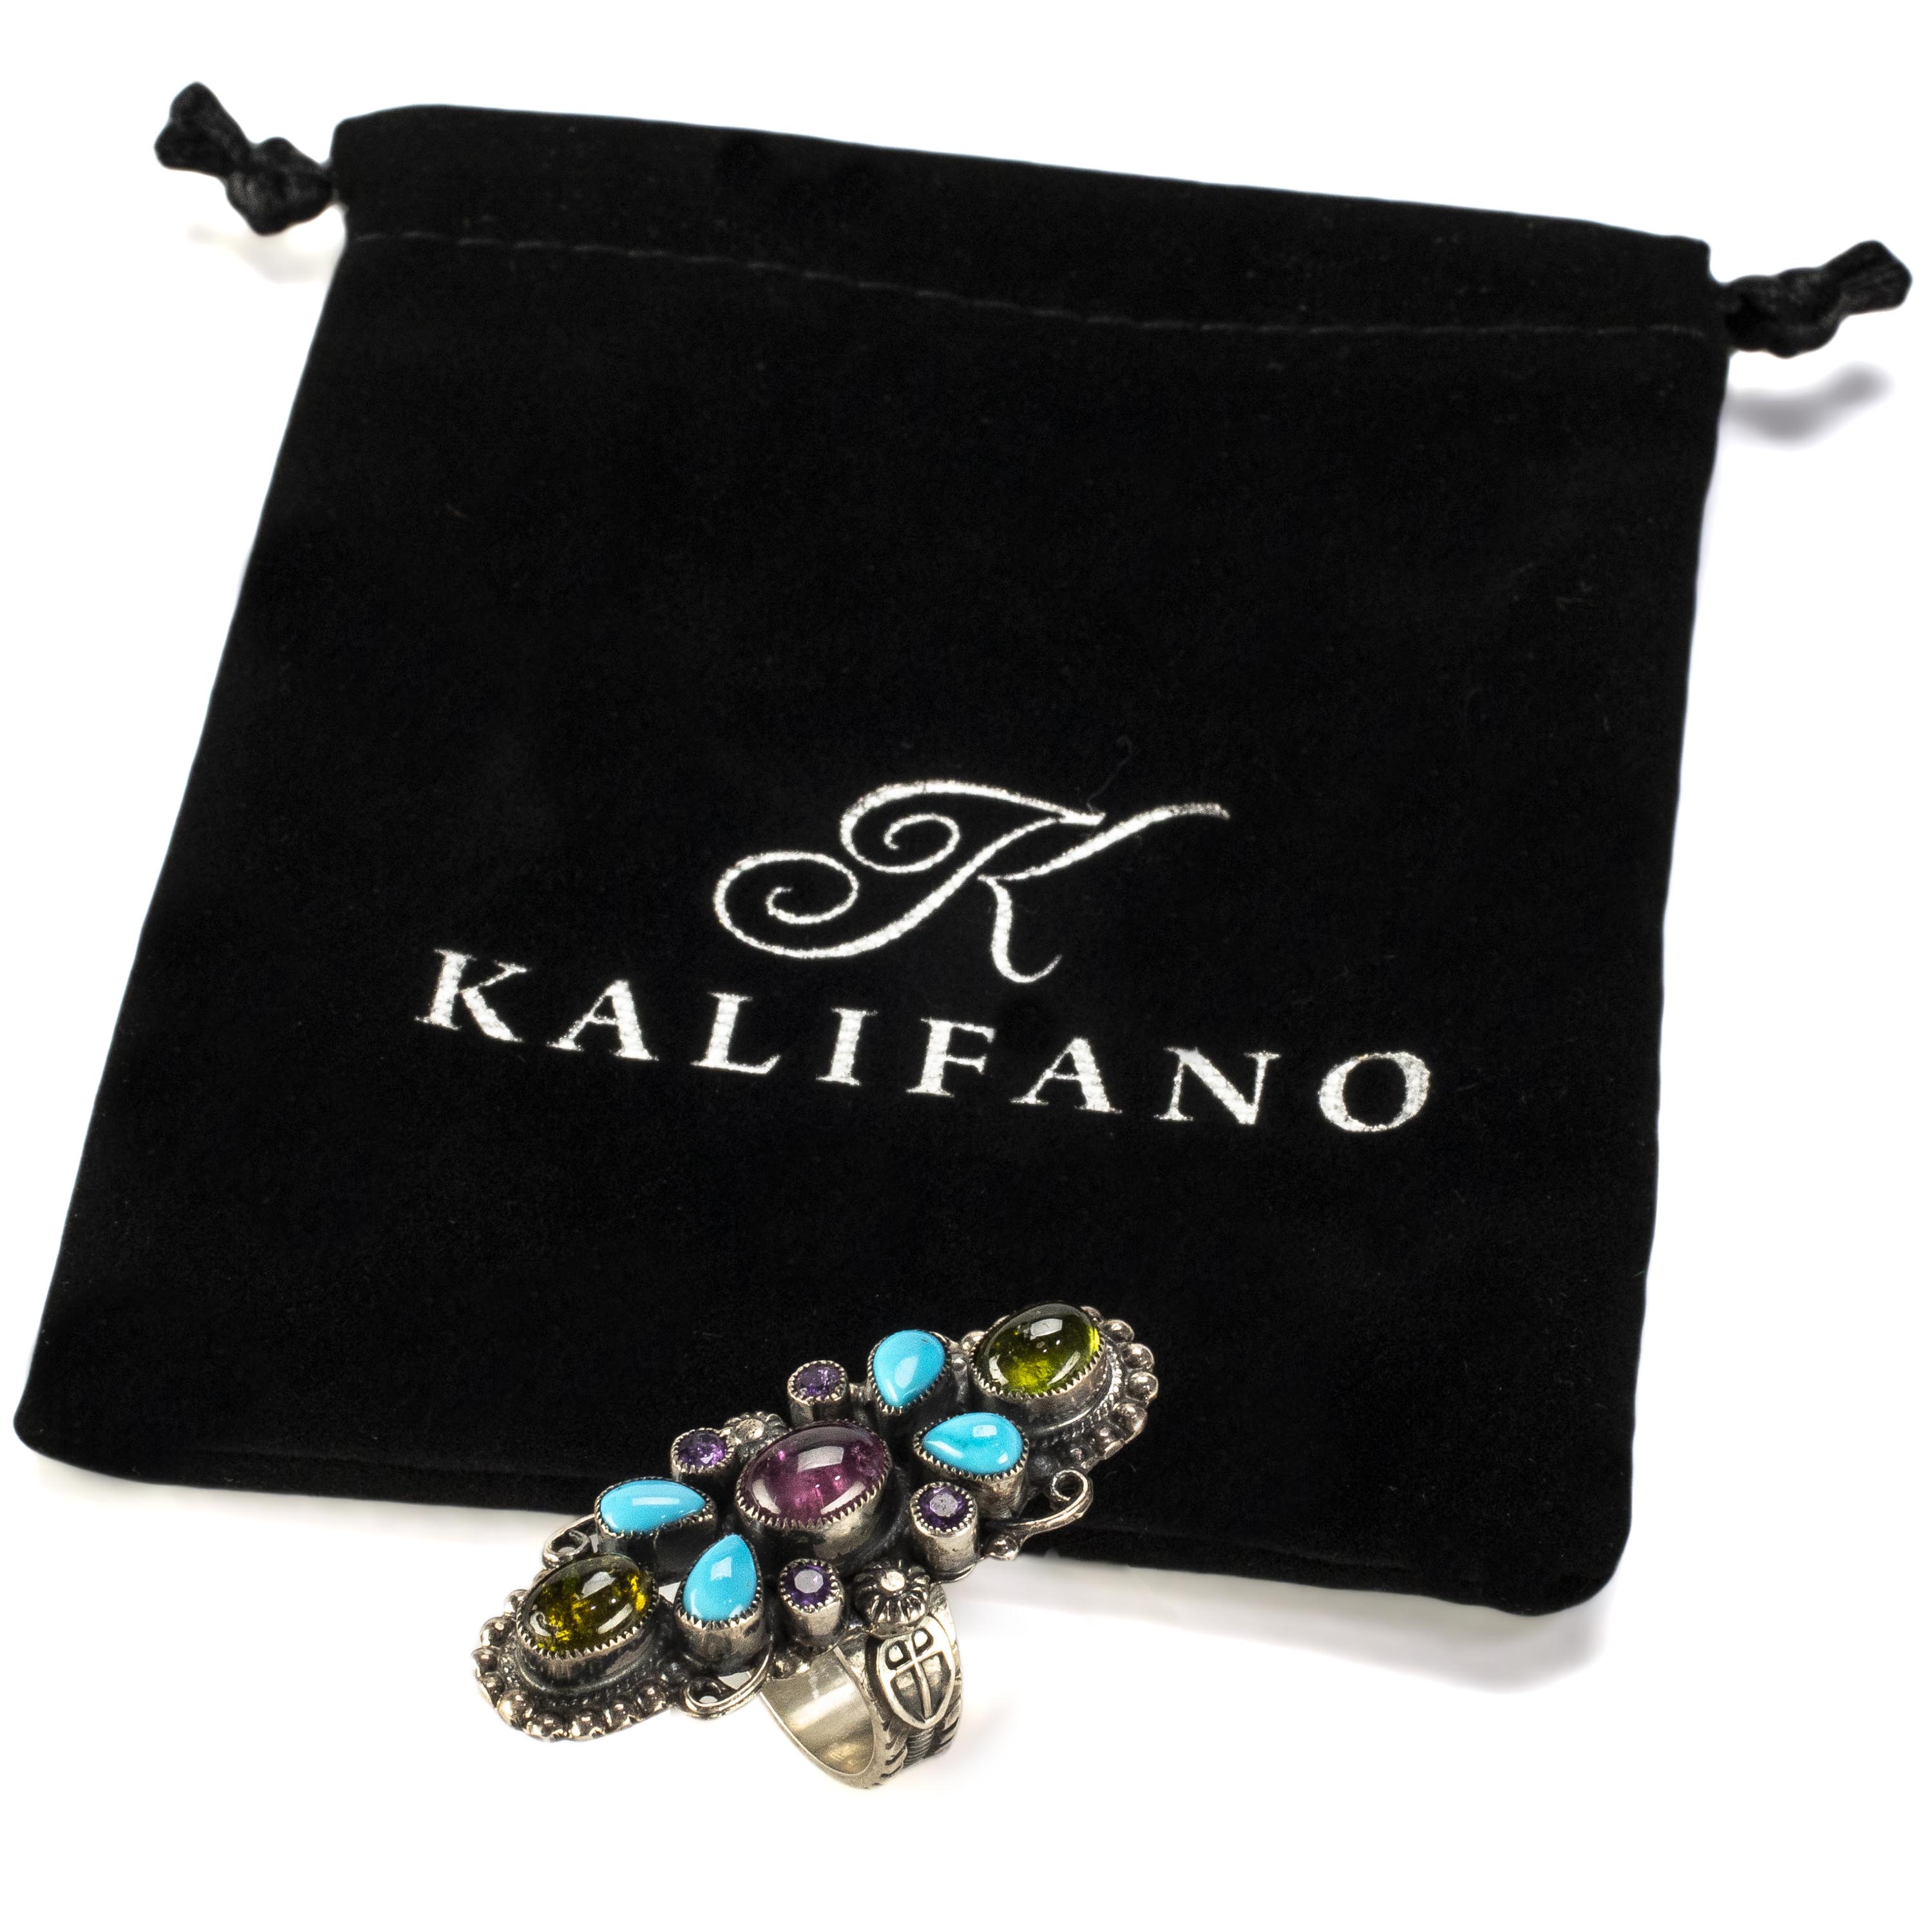 Kalifano Native American Jewelry 7 Leo Feeney Sleeping Beauty Turquoise, Peridot, Amethyst, Green & Pink Tourmaline USA Native American Made 925 Sterling Silver Ring NAR1600.005.7